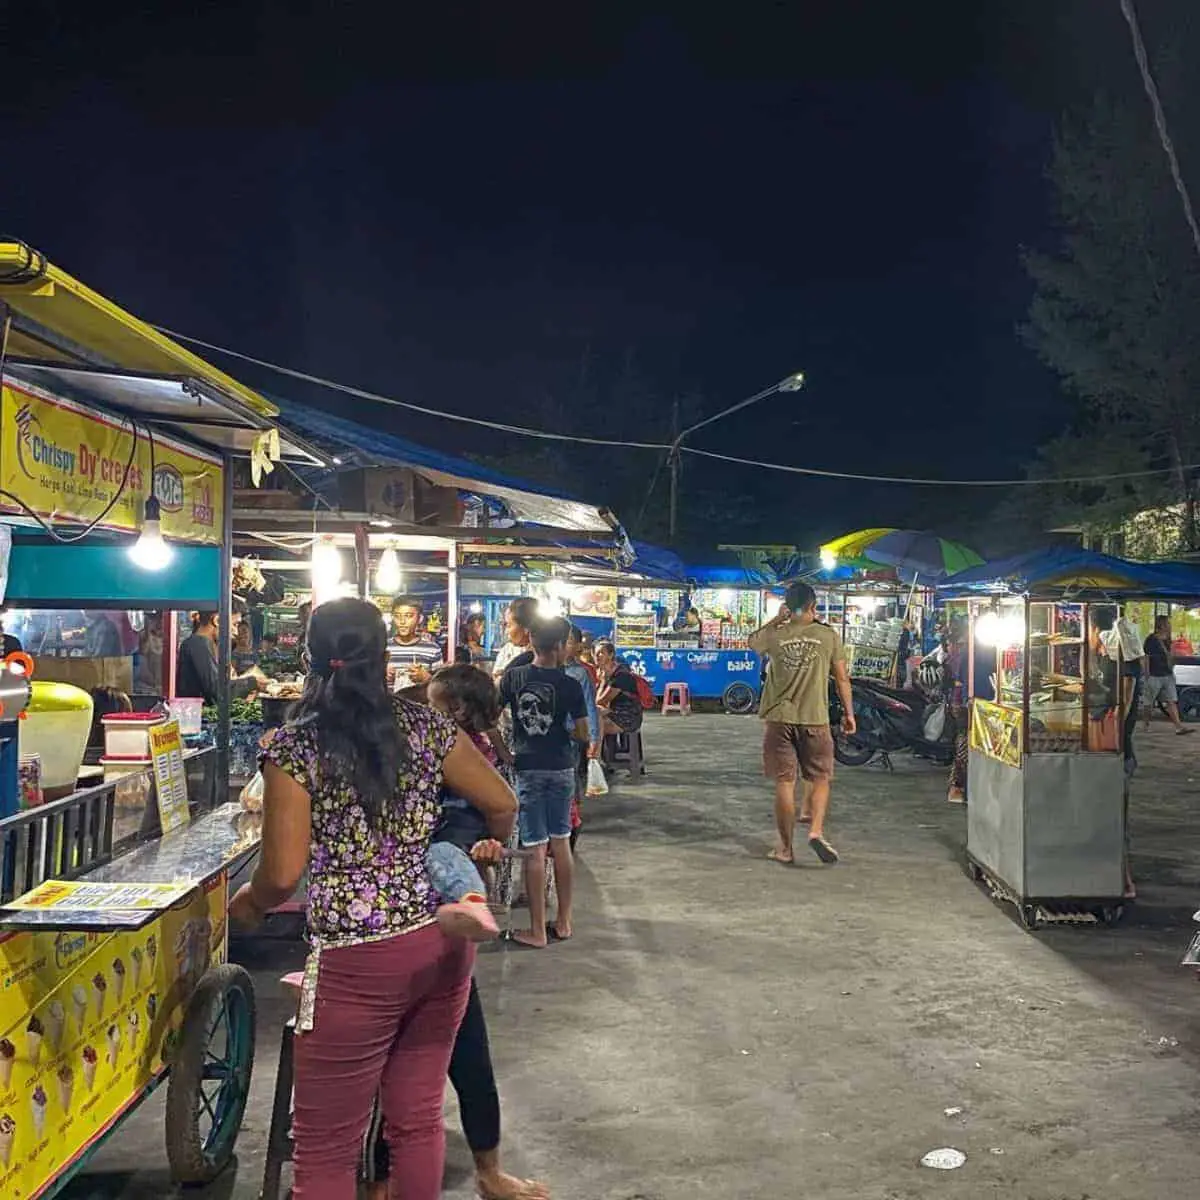 Busy street of Ubud night market with street food stalls